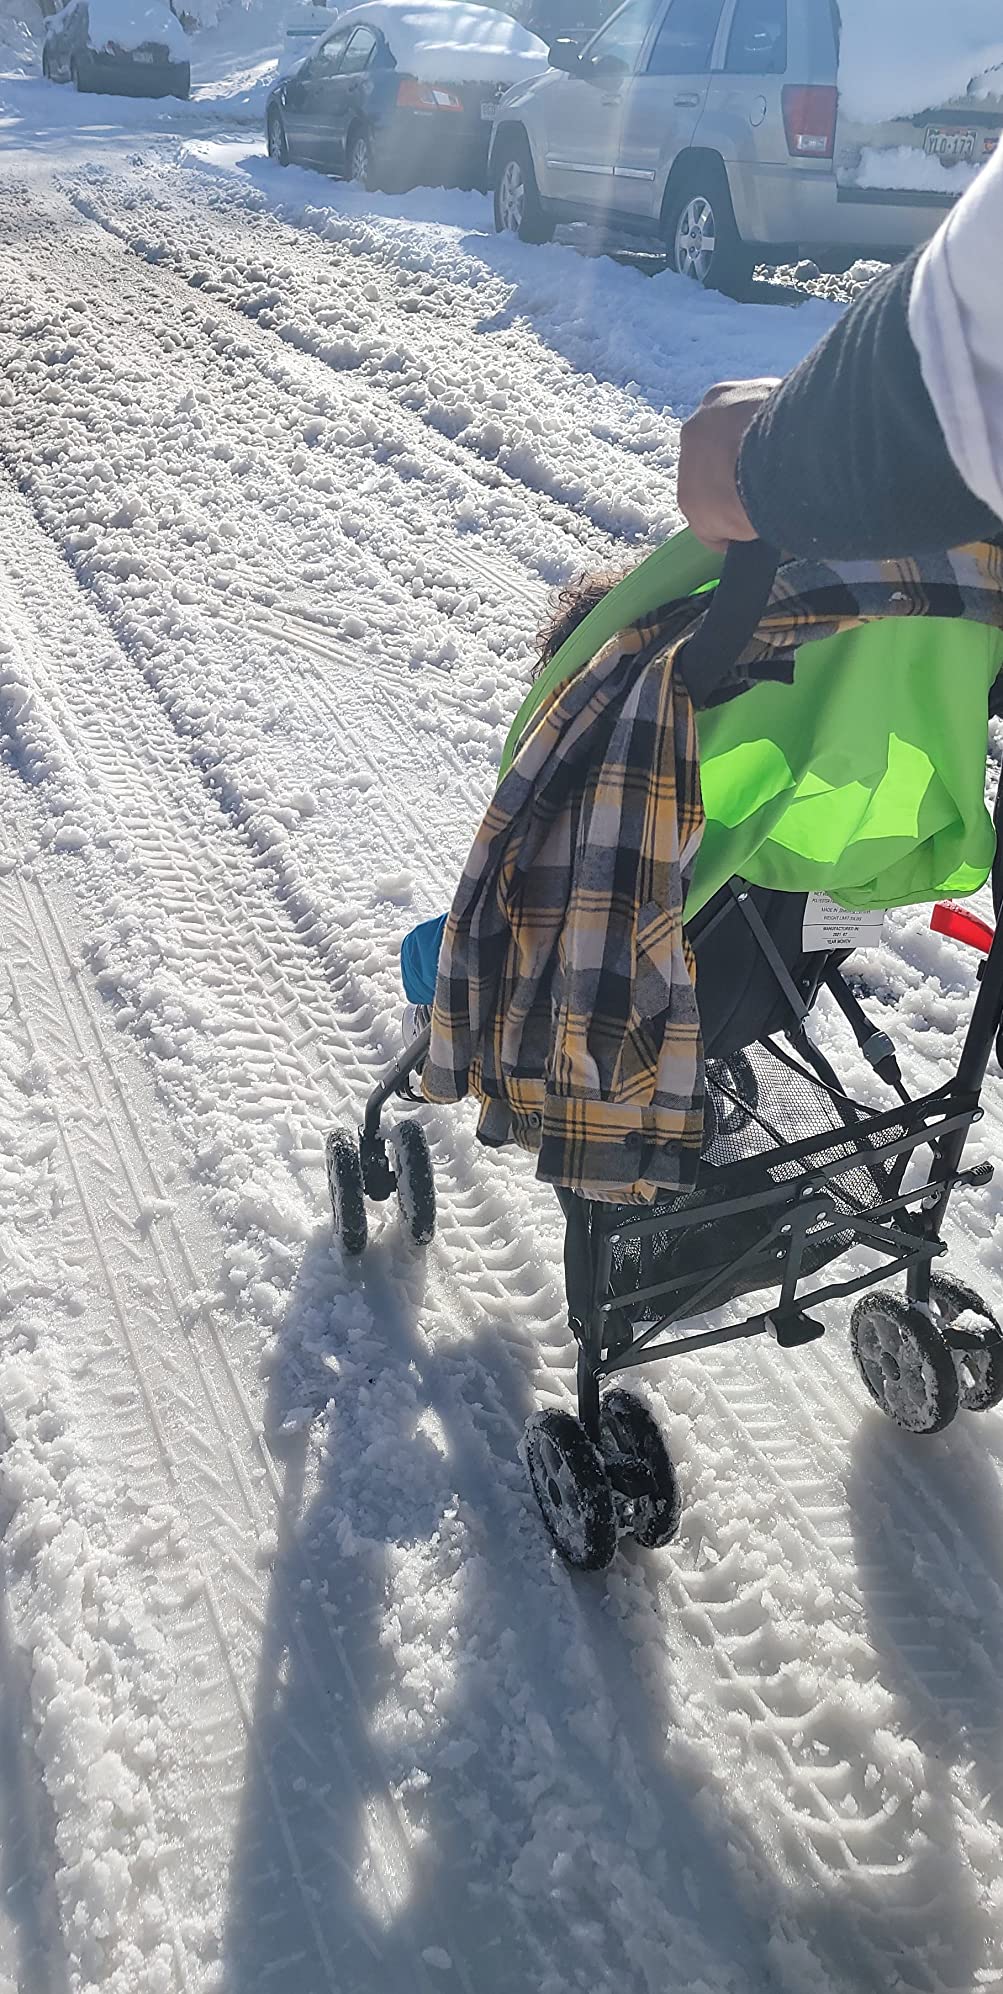 Rain sleet or snow this stroller can make it through anything